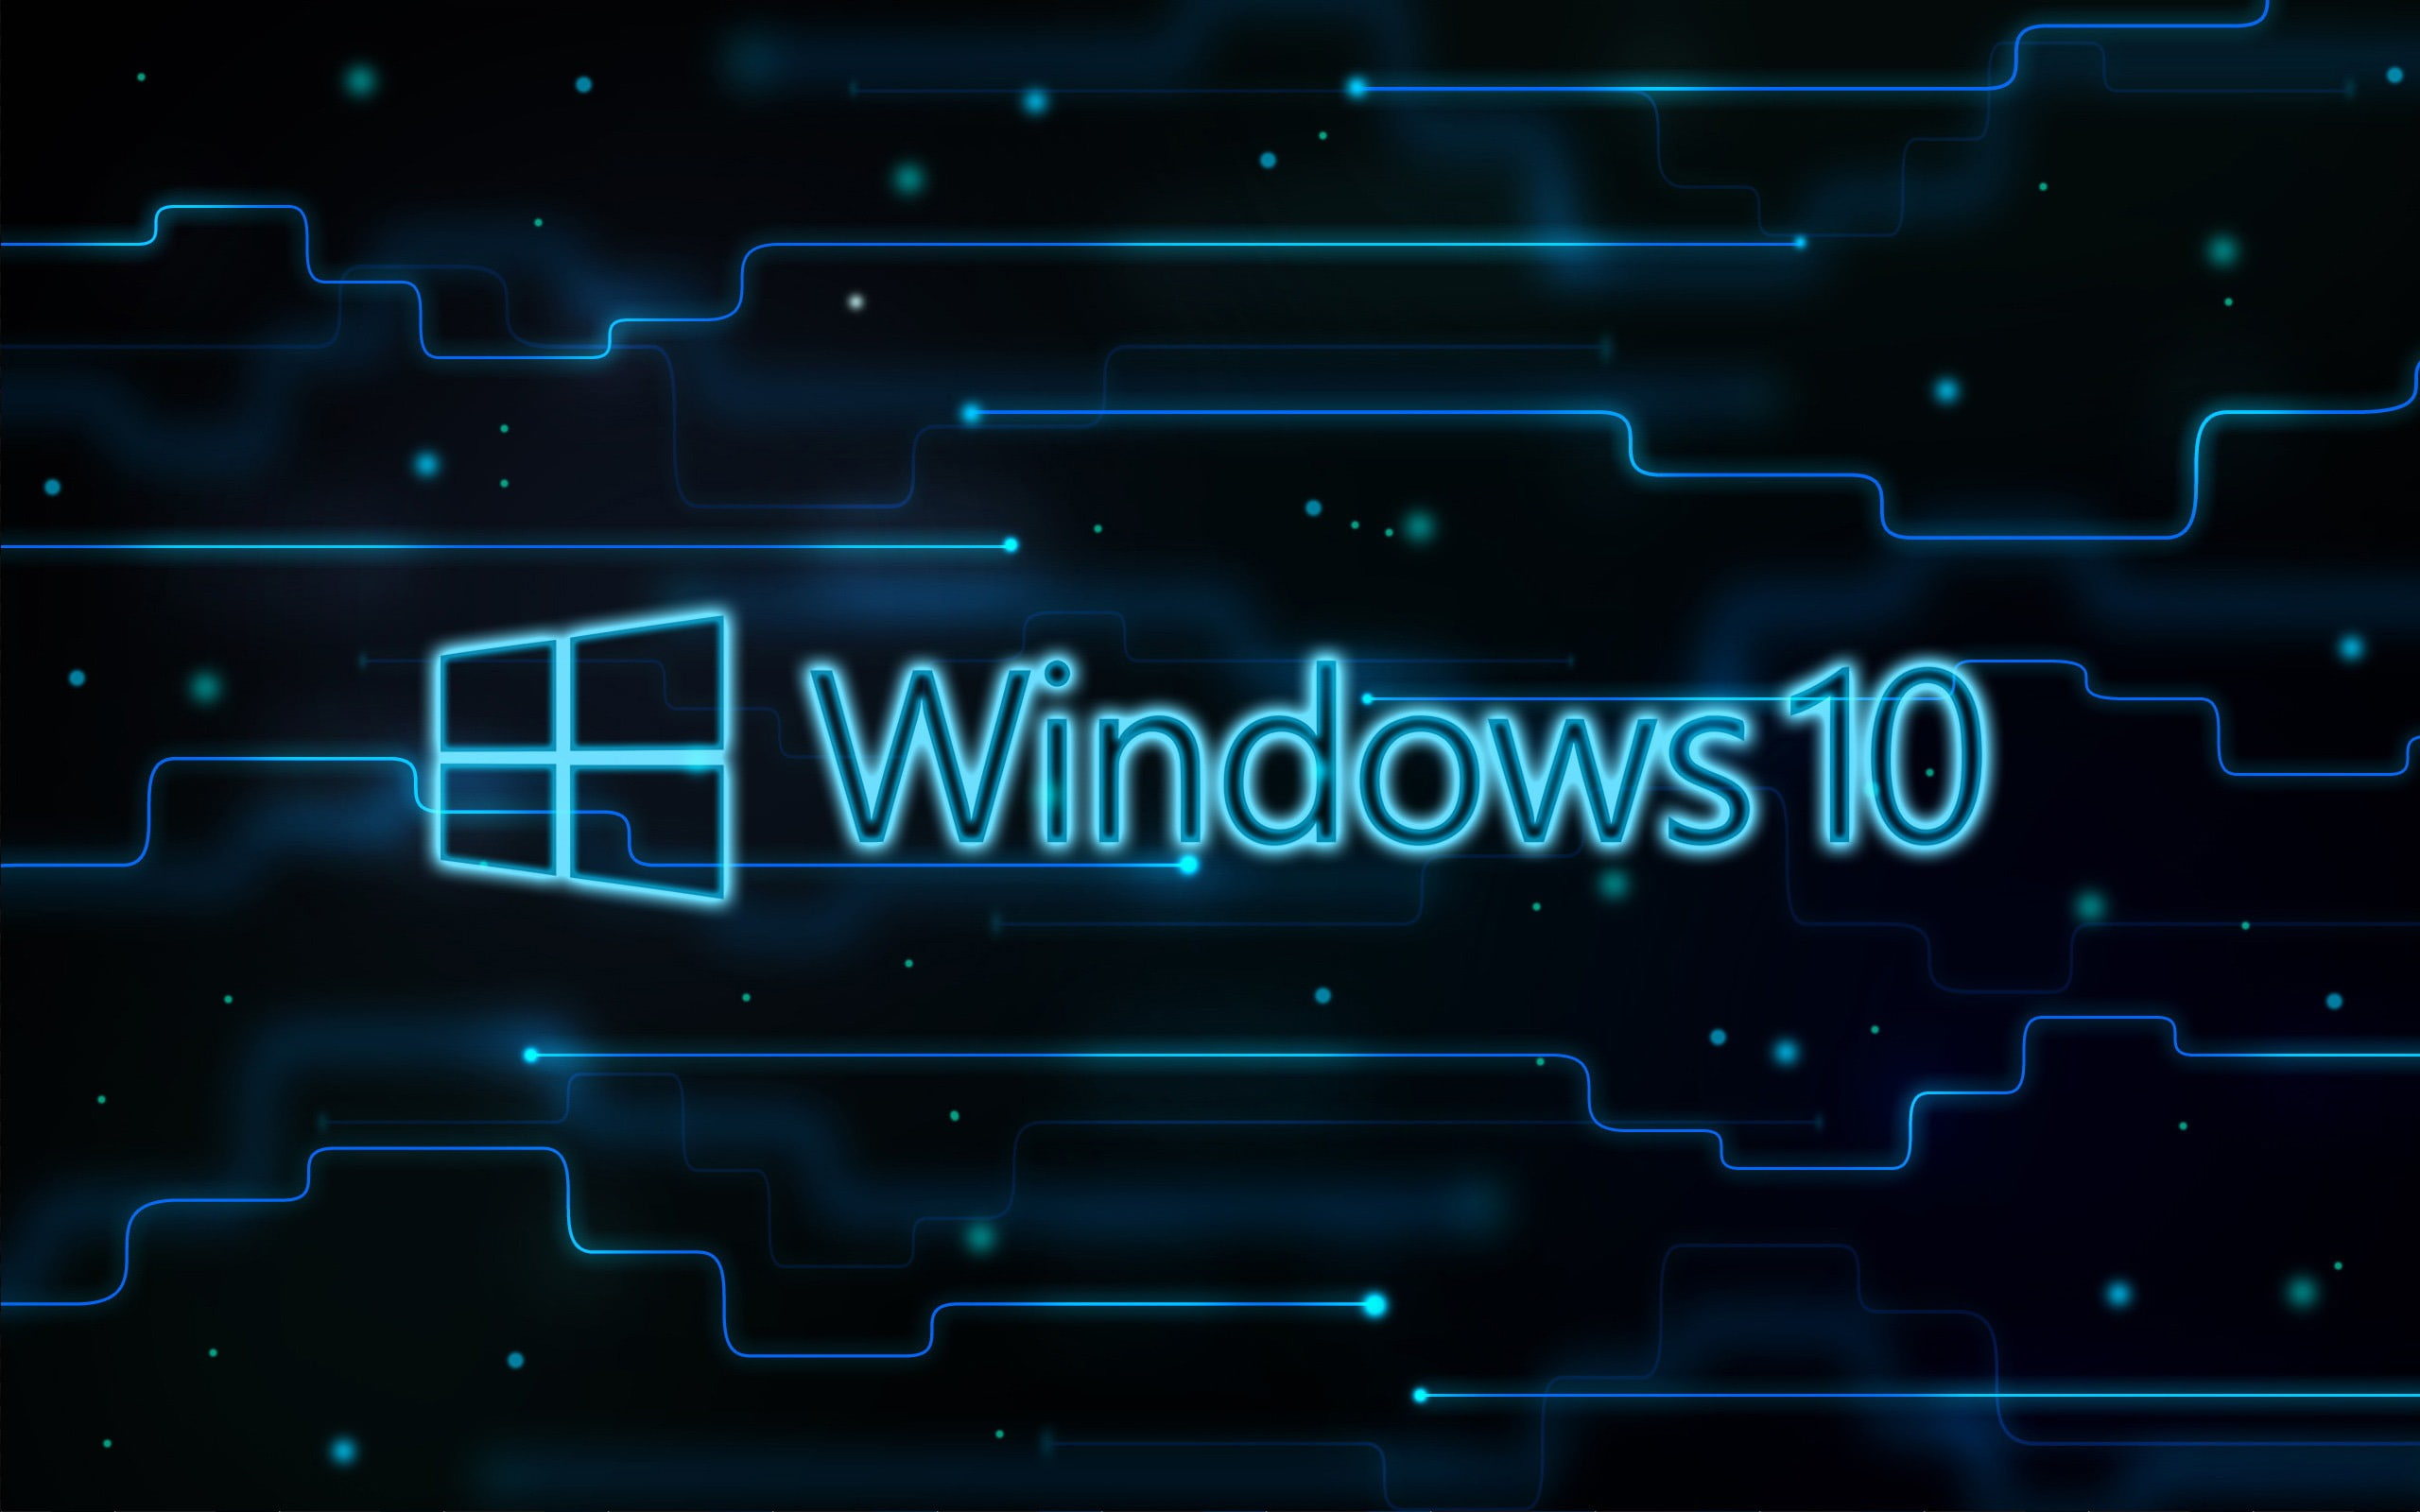 Windows 10 HD Theme Desktop Wallpaper 13, Windows 10 logo, text